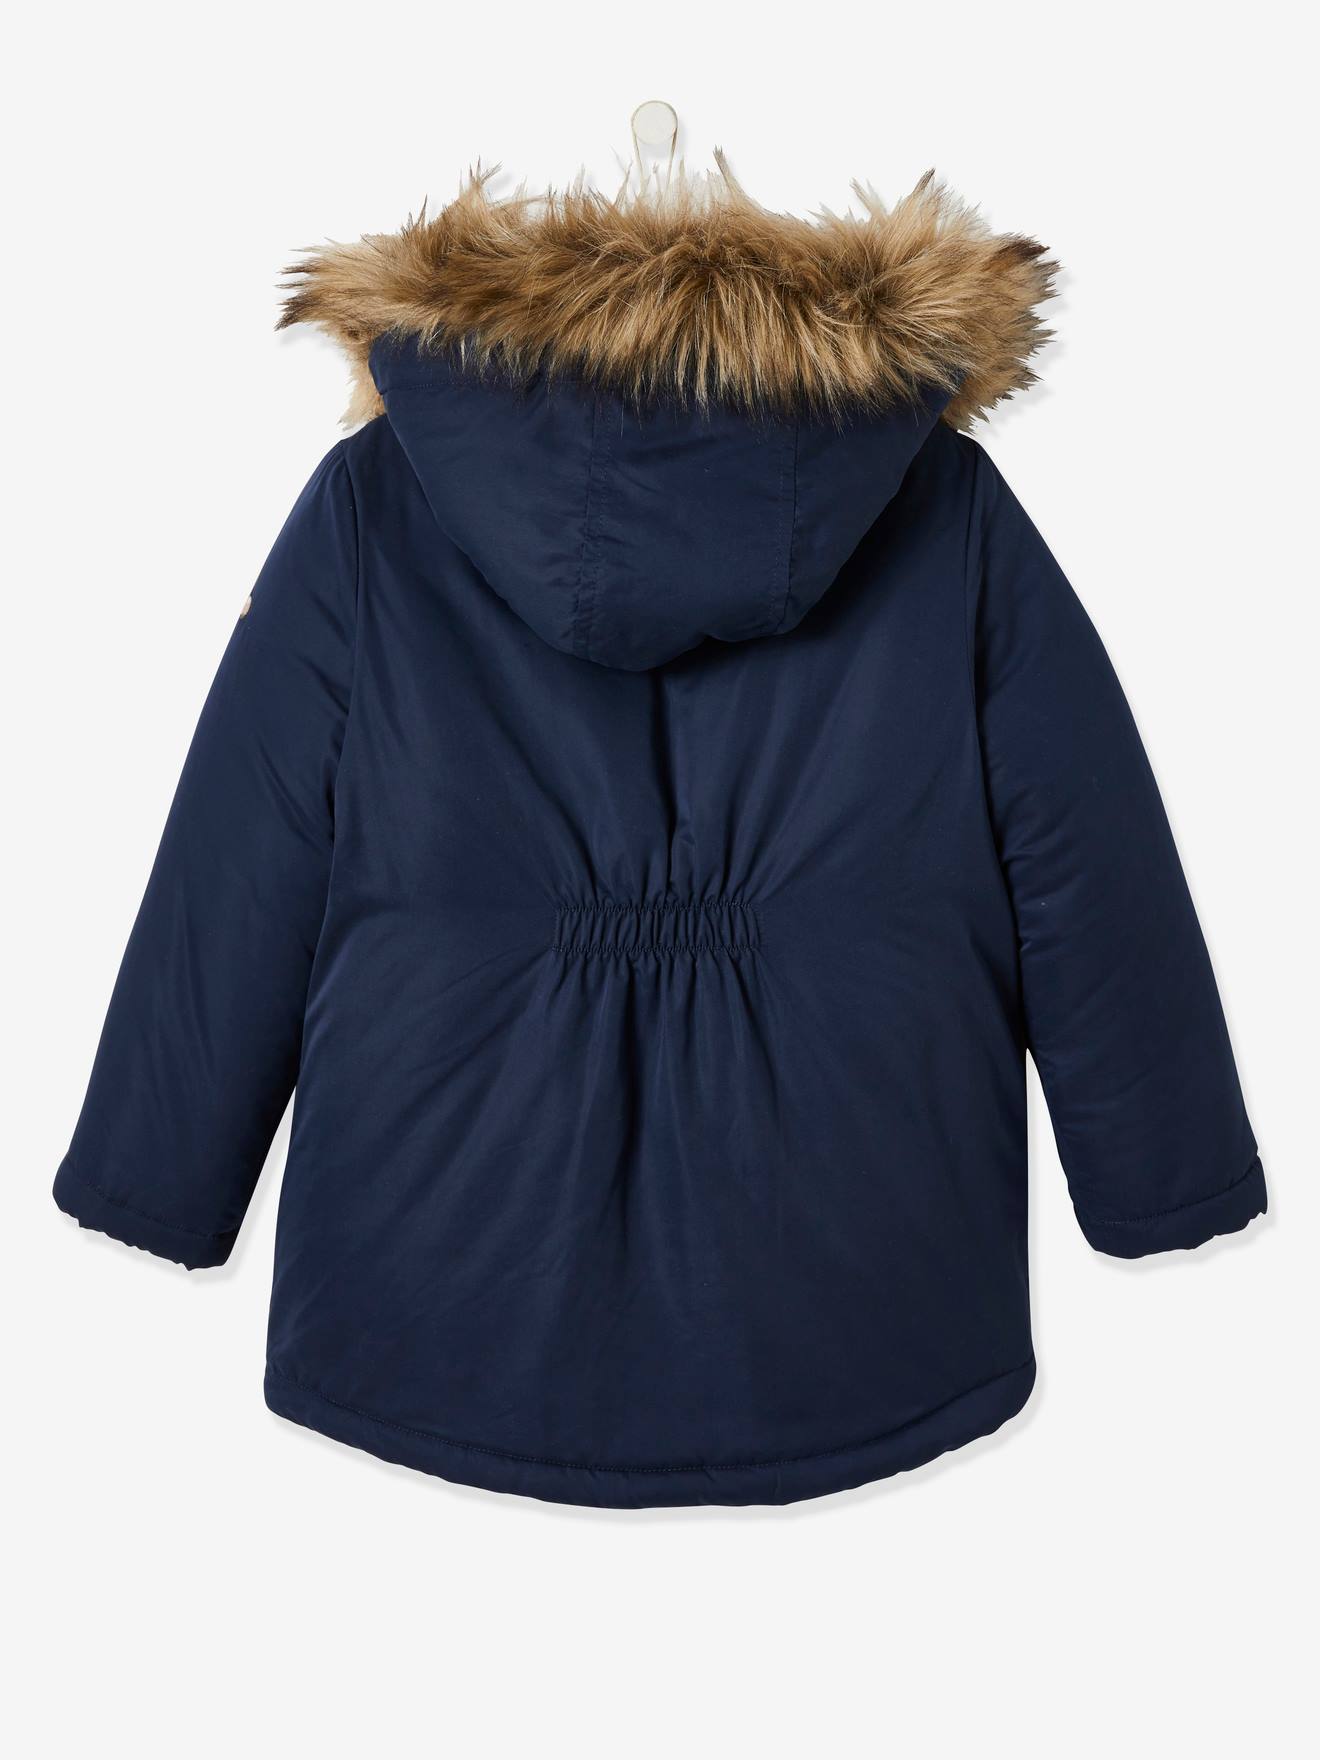 Vet Egoïsme Inferieur 3-in-1 Hooded Parka, Jacket with Recycled Polyester Padding, for Girls -  dark blue, Girls